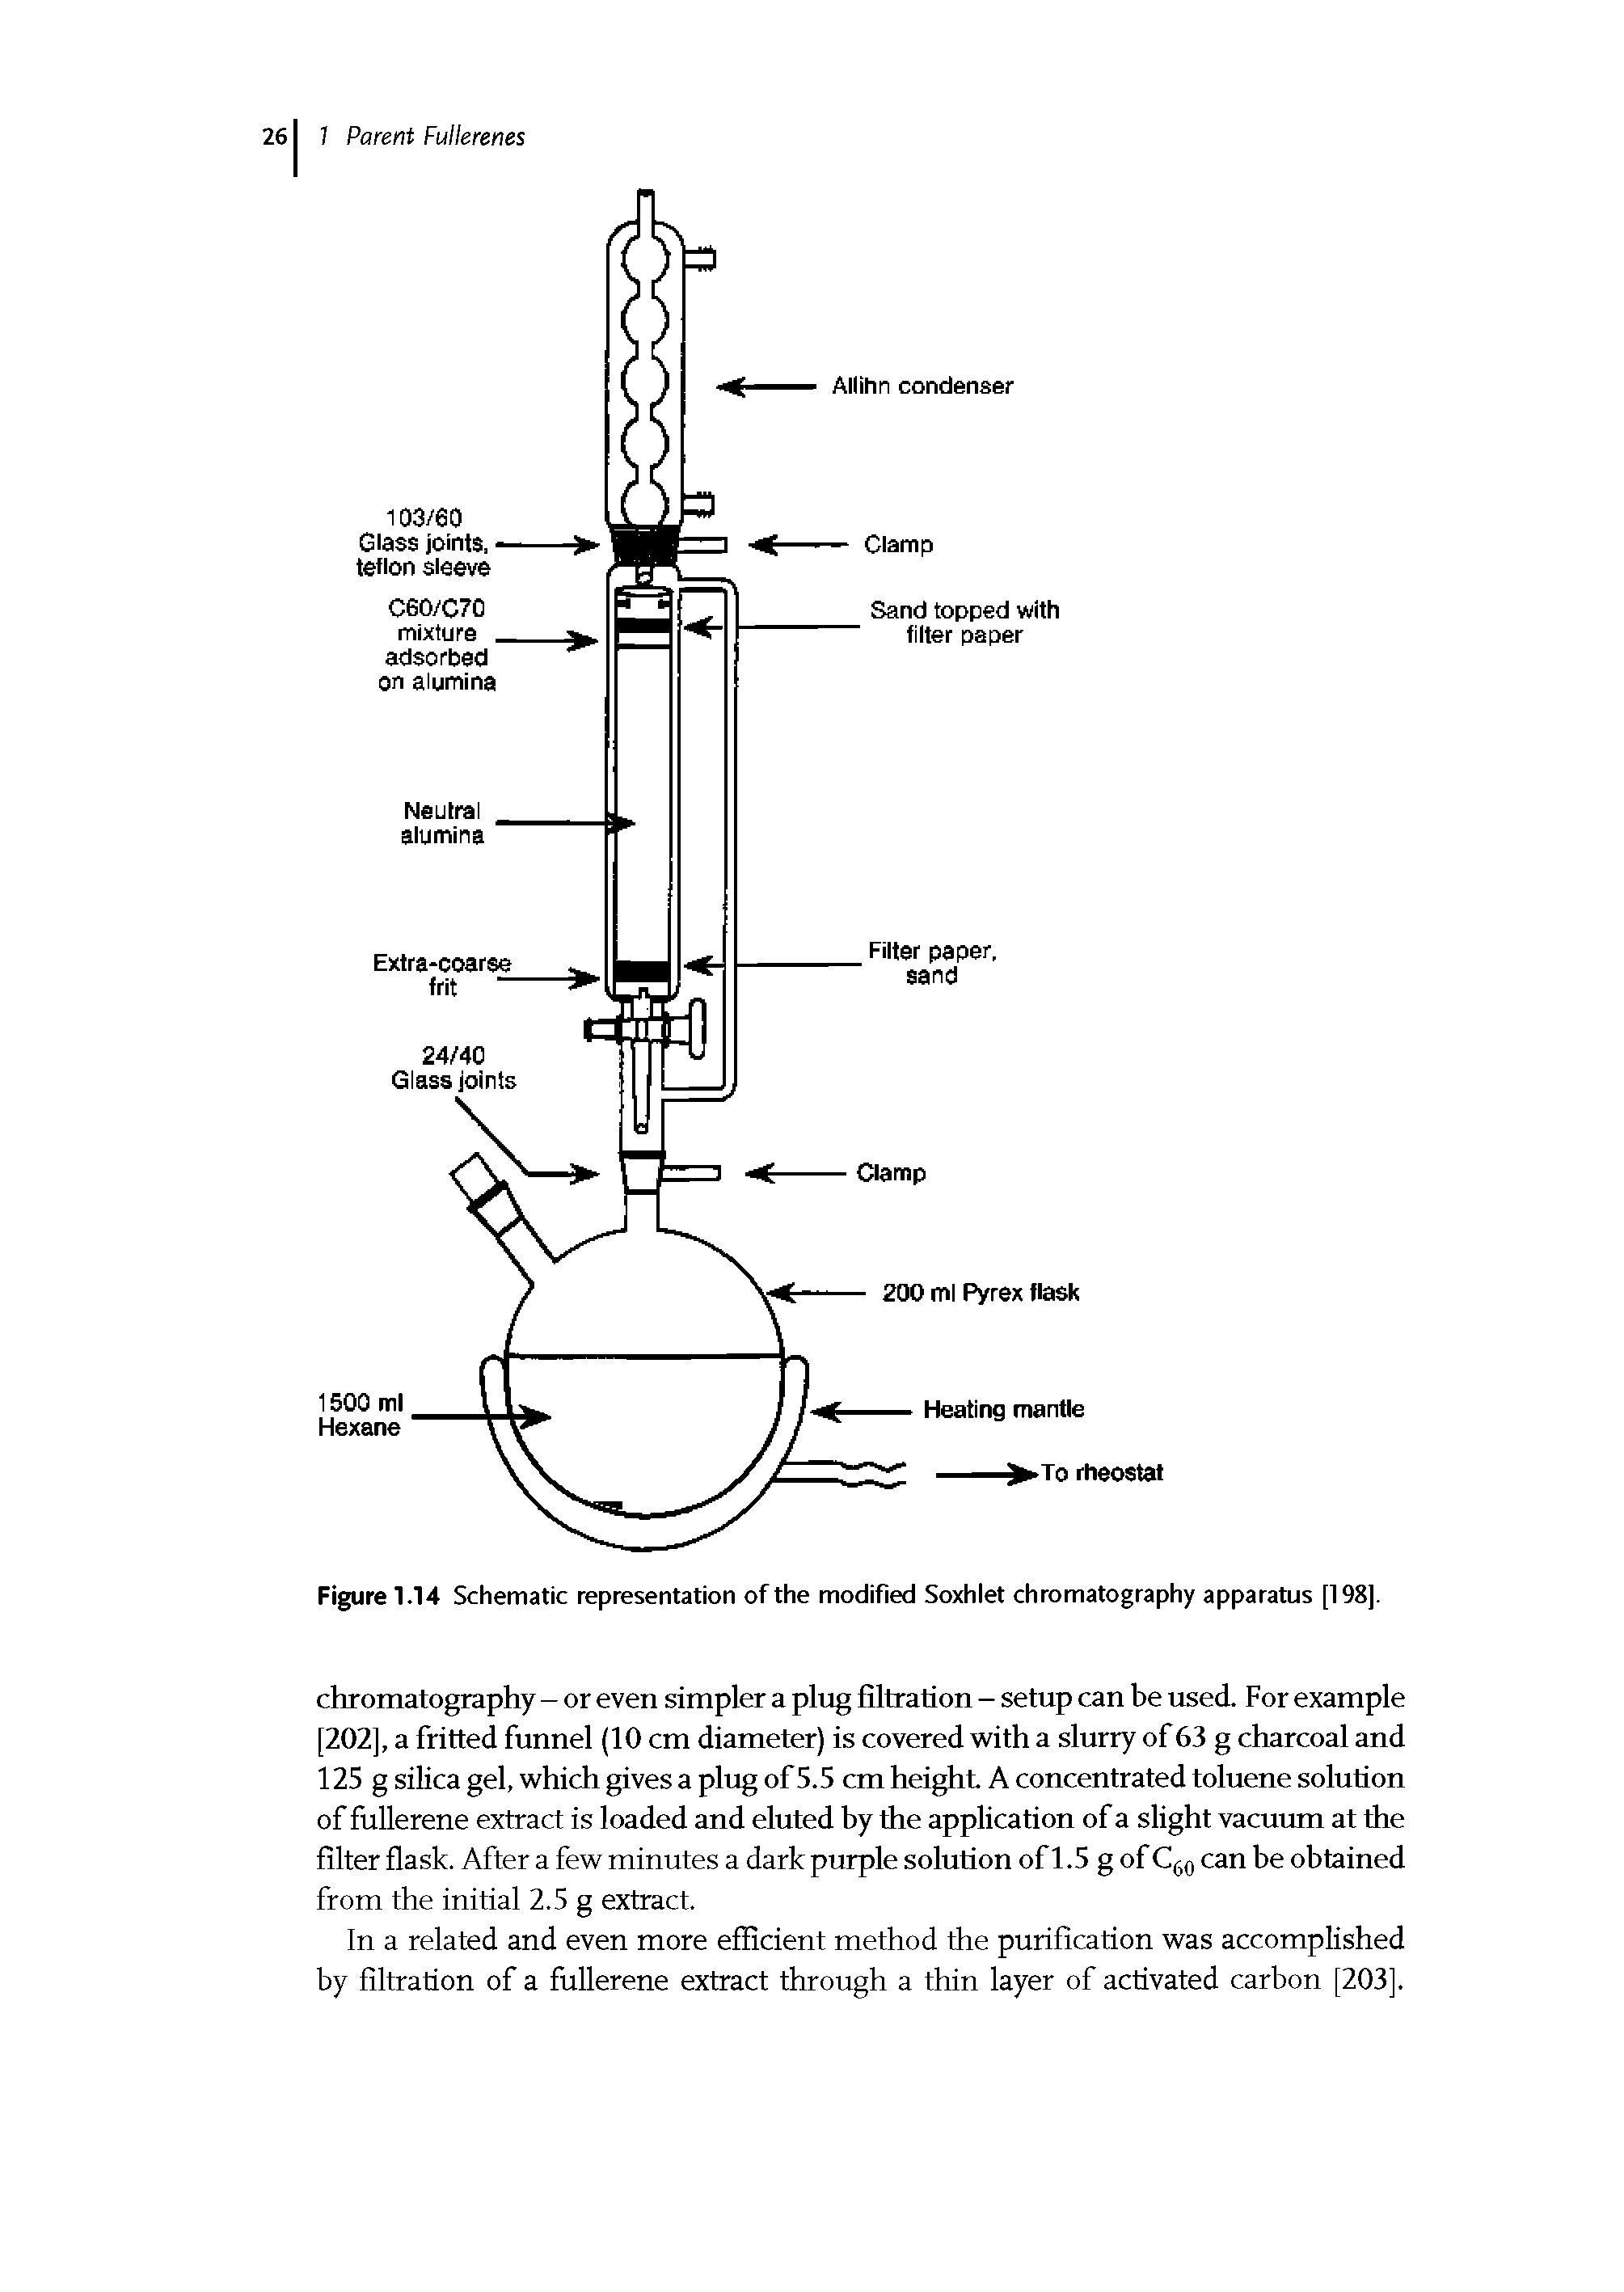 Figure 1.14 Schematic representation of the modified Soxhiet chromatography apparatus [198].